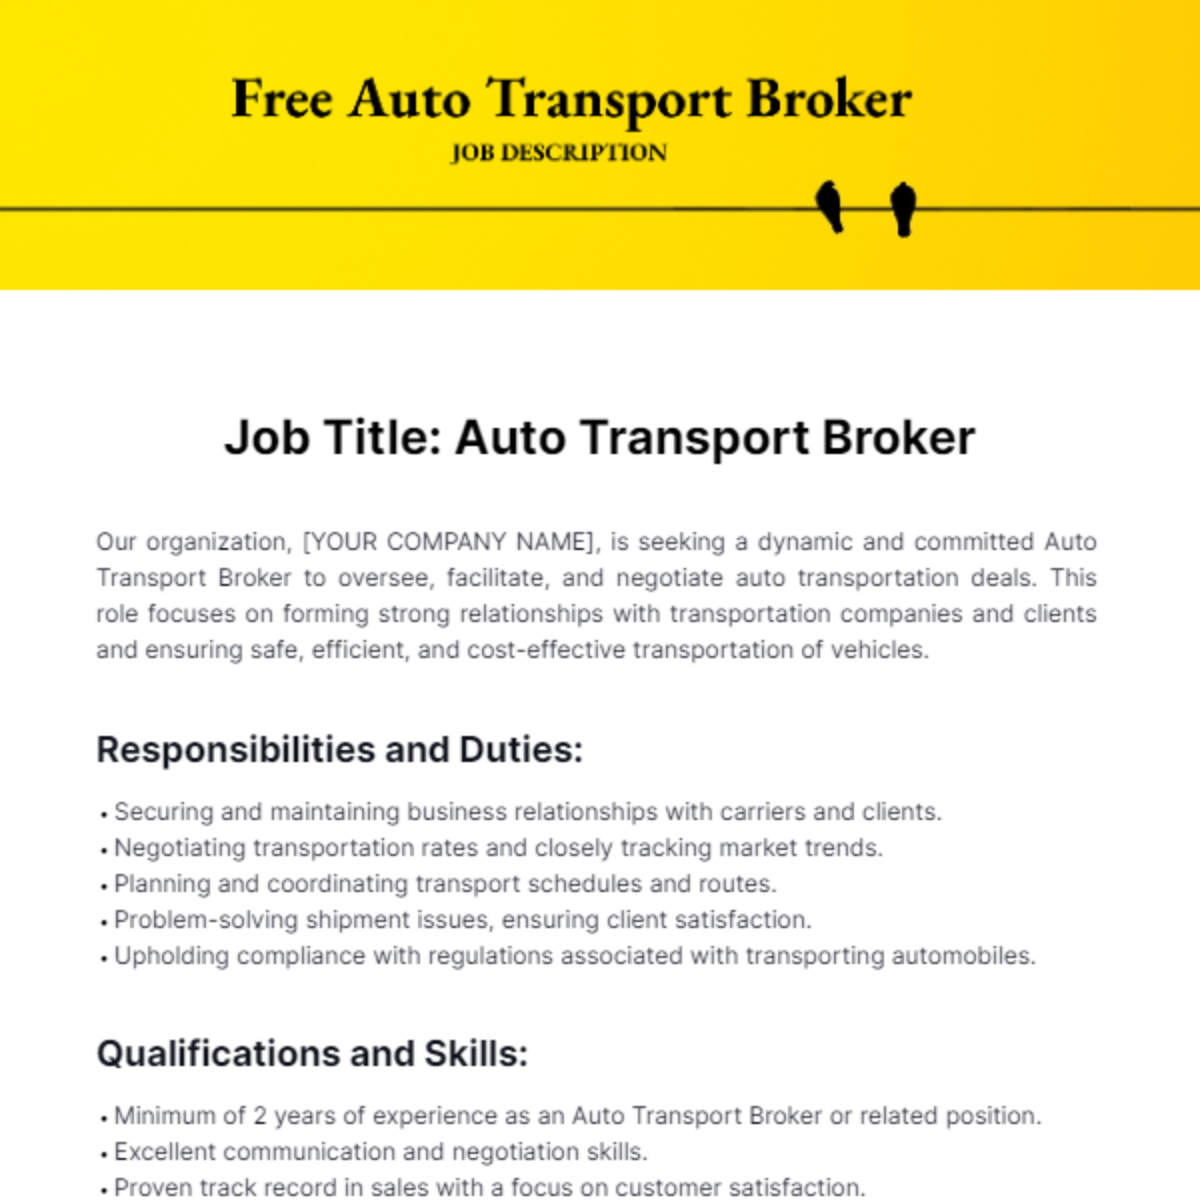 Free Auto Transport Broker Job Description Template